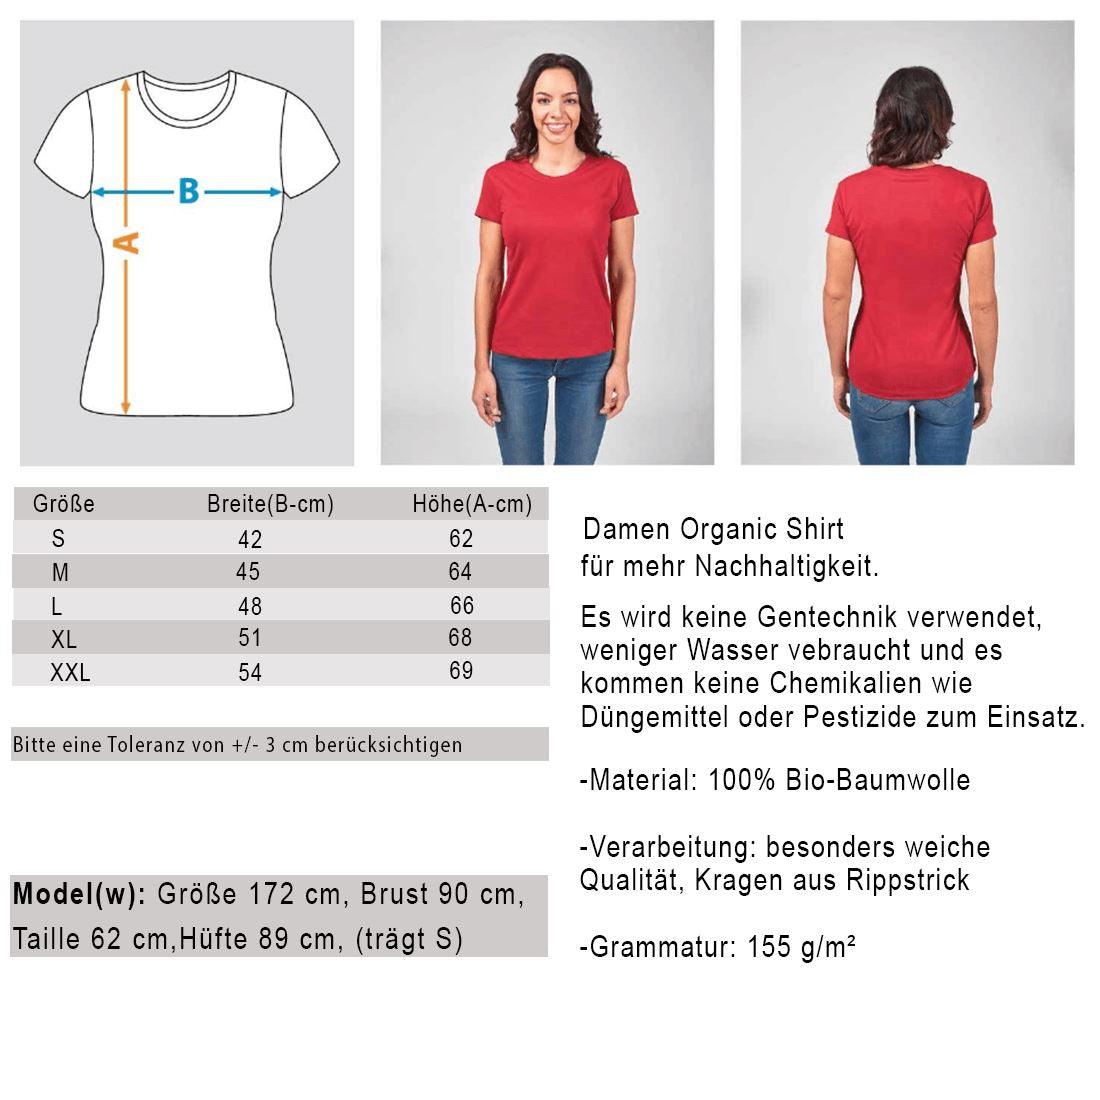 Be kind to every kind [Svenja Rakel] - Damen Organic Shirt - Team Vegan © vegan t shirt